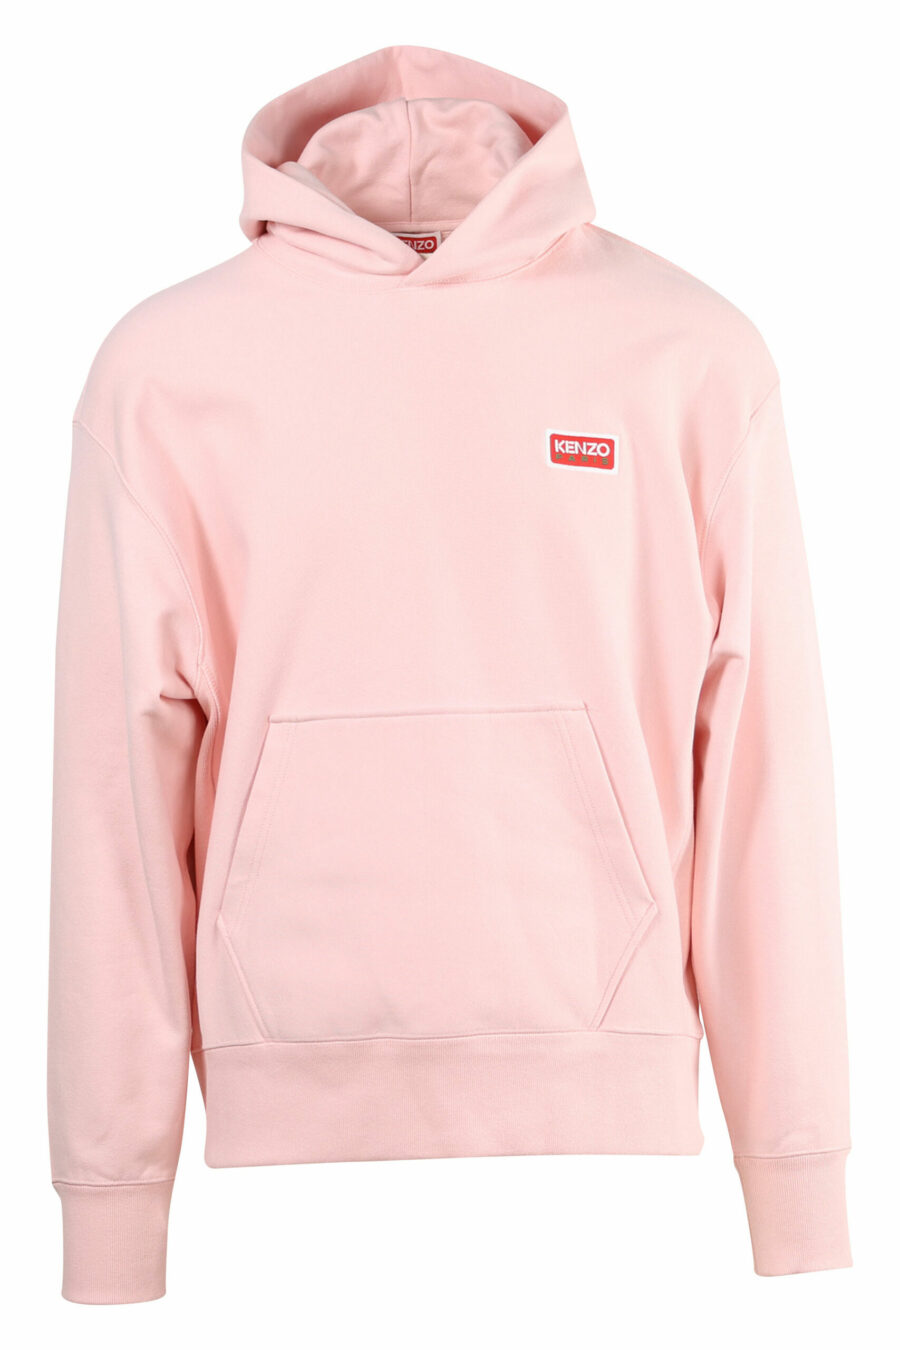 Pink hooded sweatshirt with "kenzo paris" maxilogo on the back - 3612230537439 2 scaled